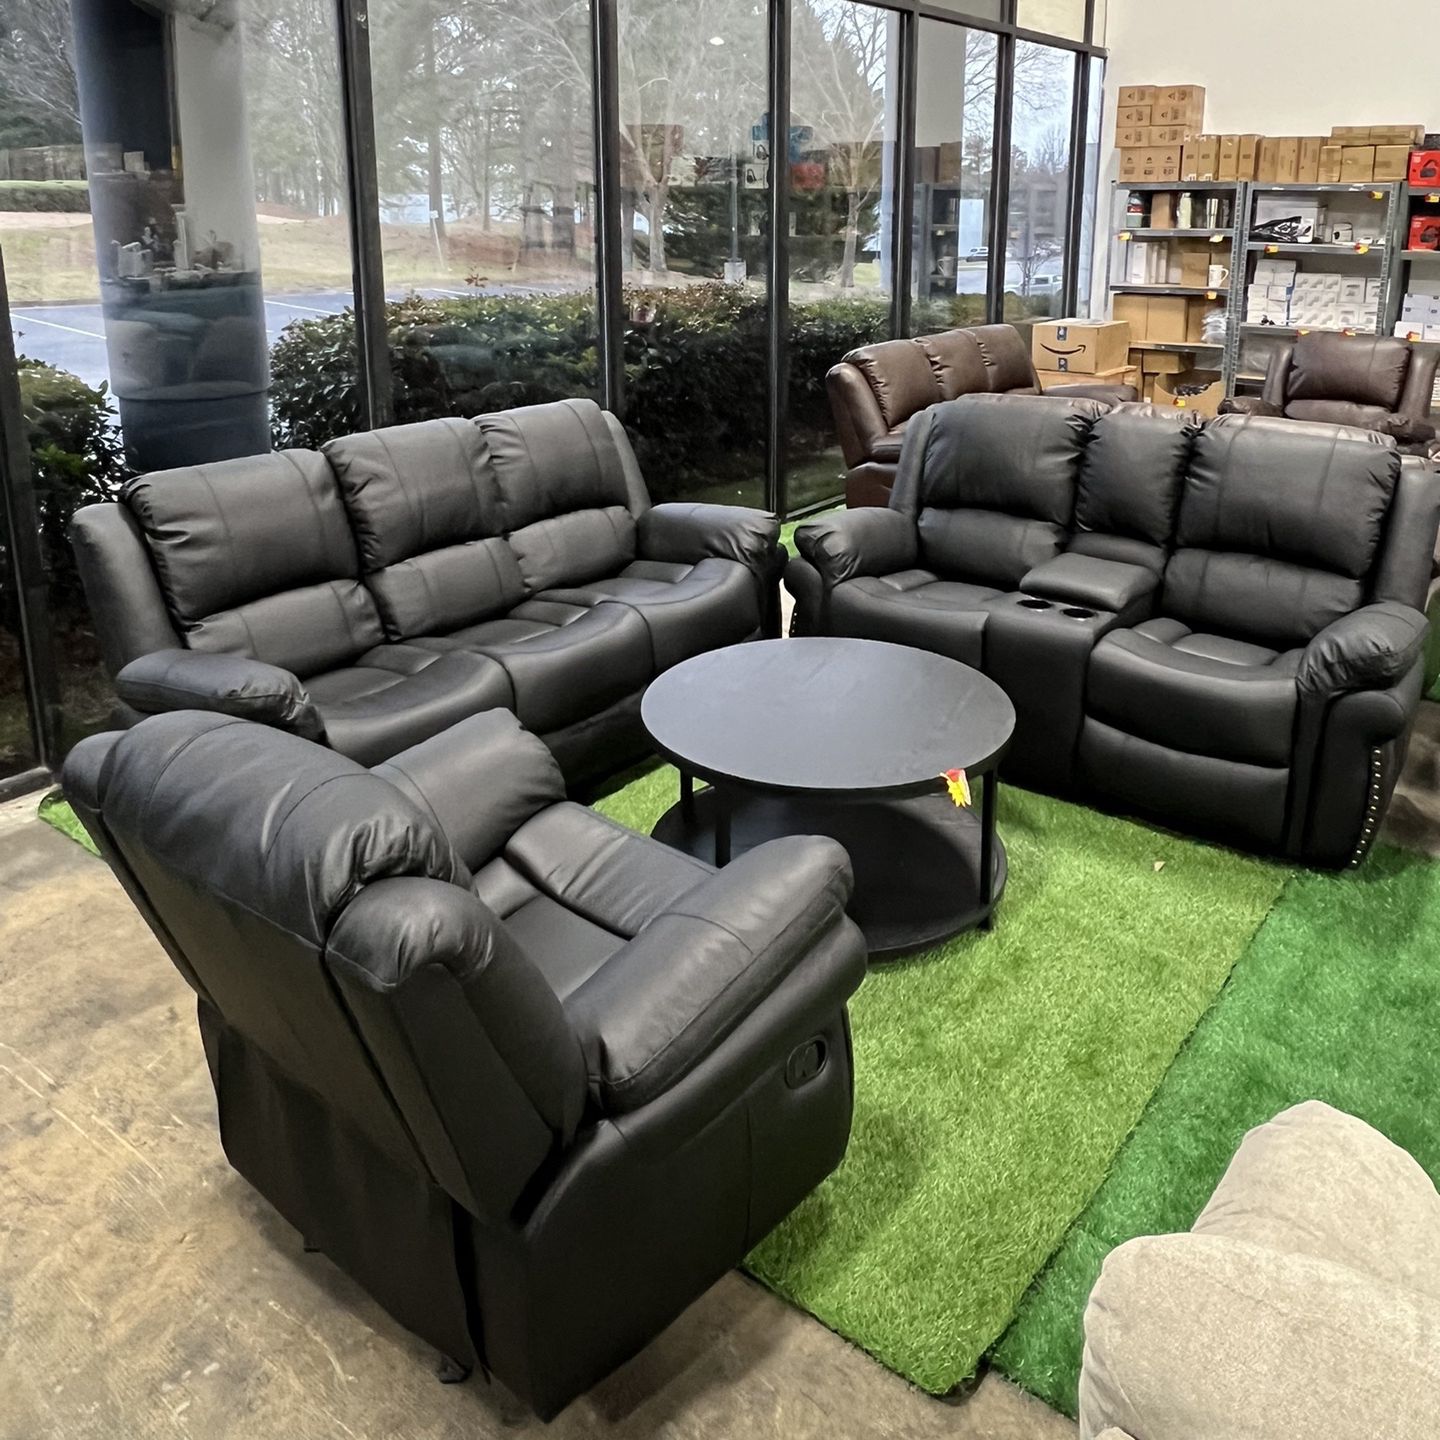 Recliner Black Leather 3pcs Sofa Set / Juego de sofás reclinables de cuero negro de 3 piezas